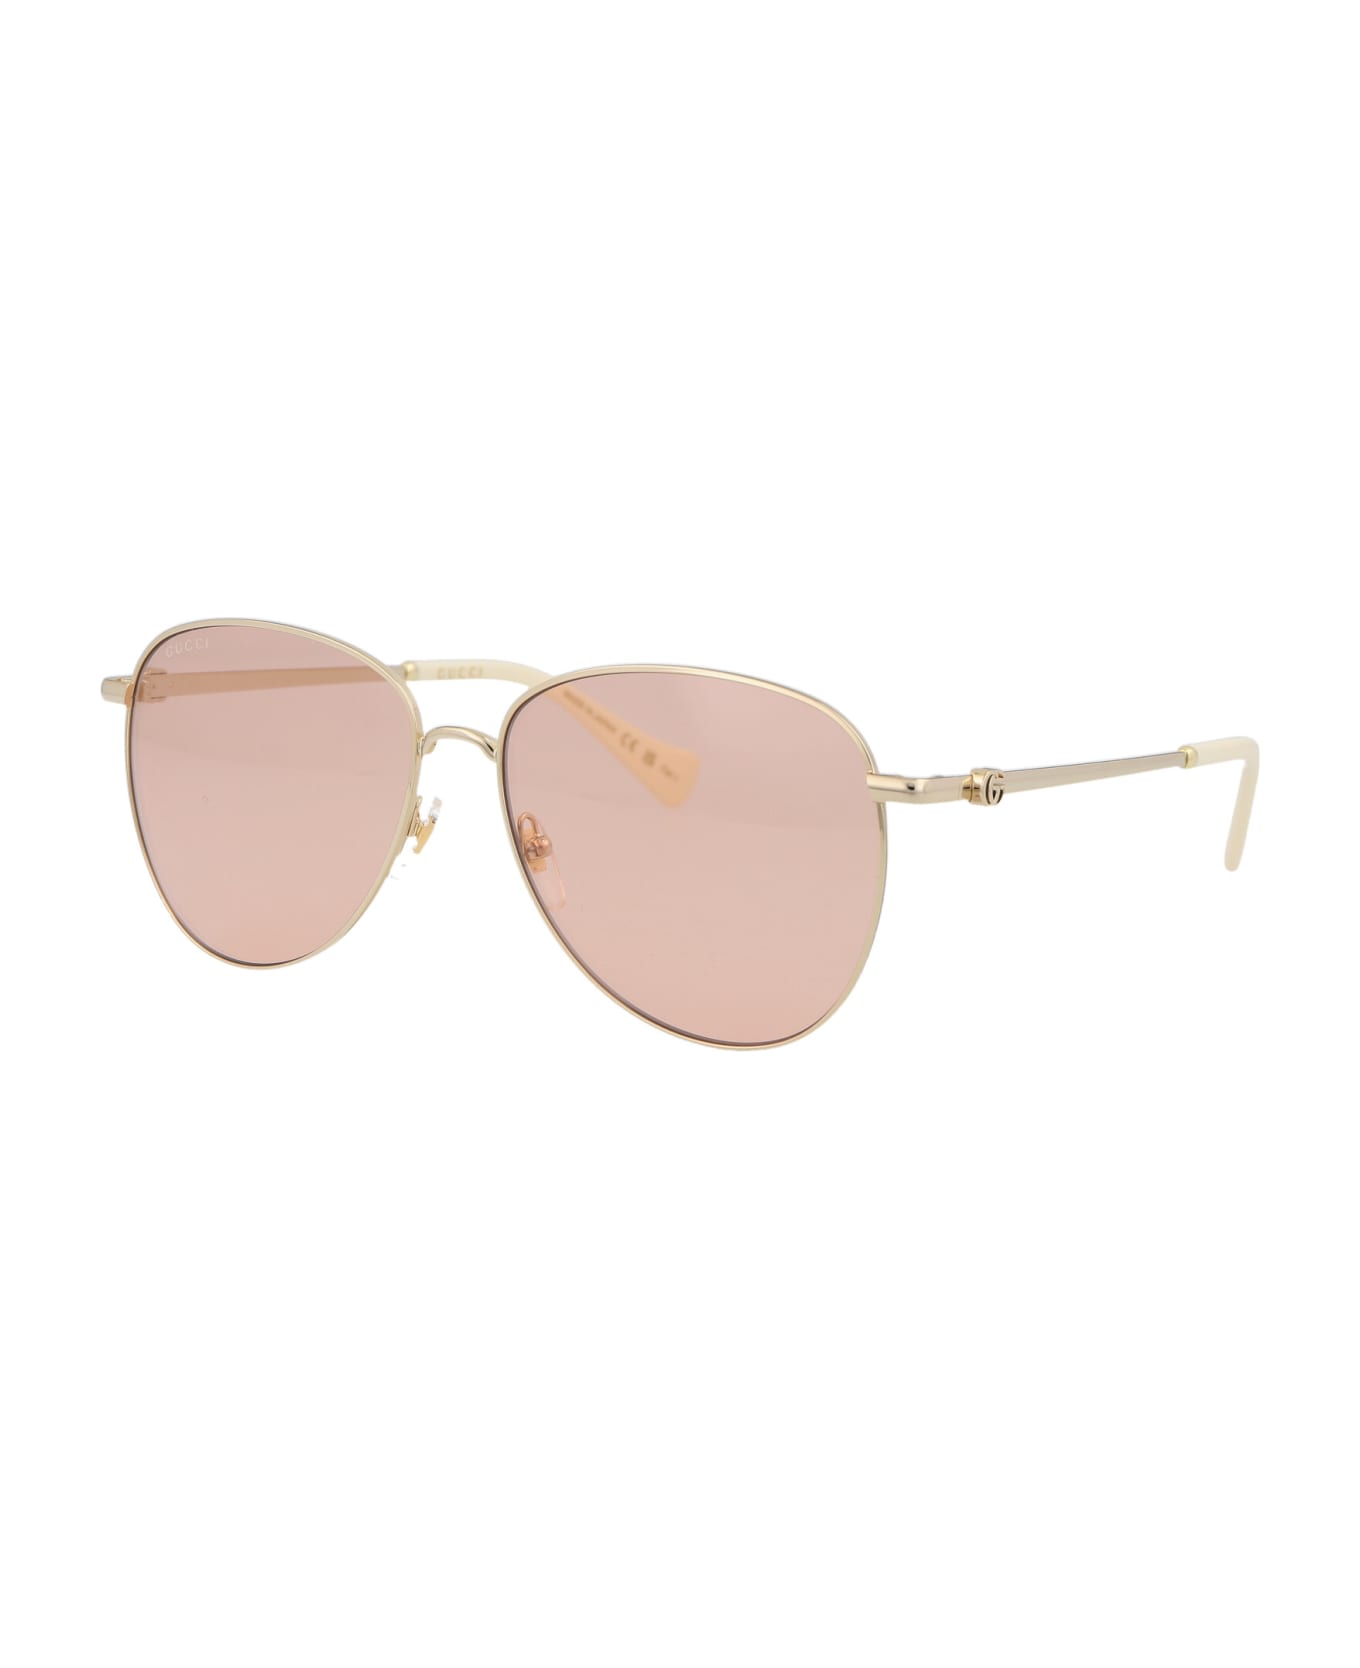 Gucci Eyewear Gg1419s Sunglasses - 003 GOLD GOLD PINK